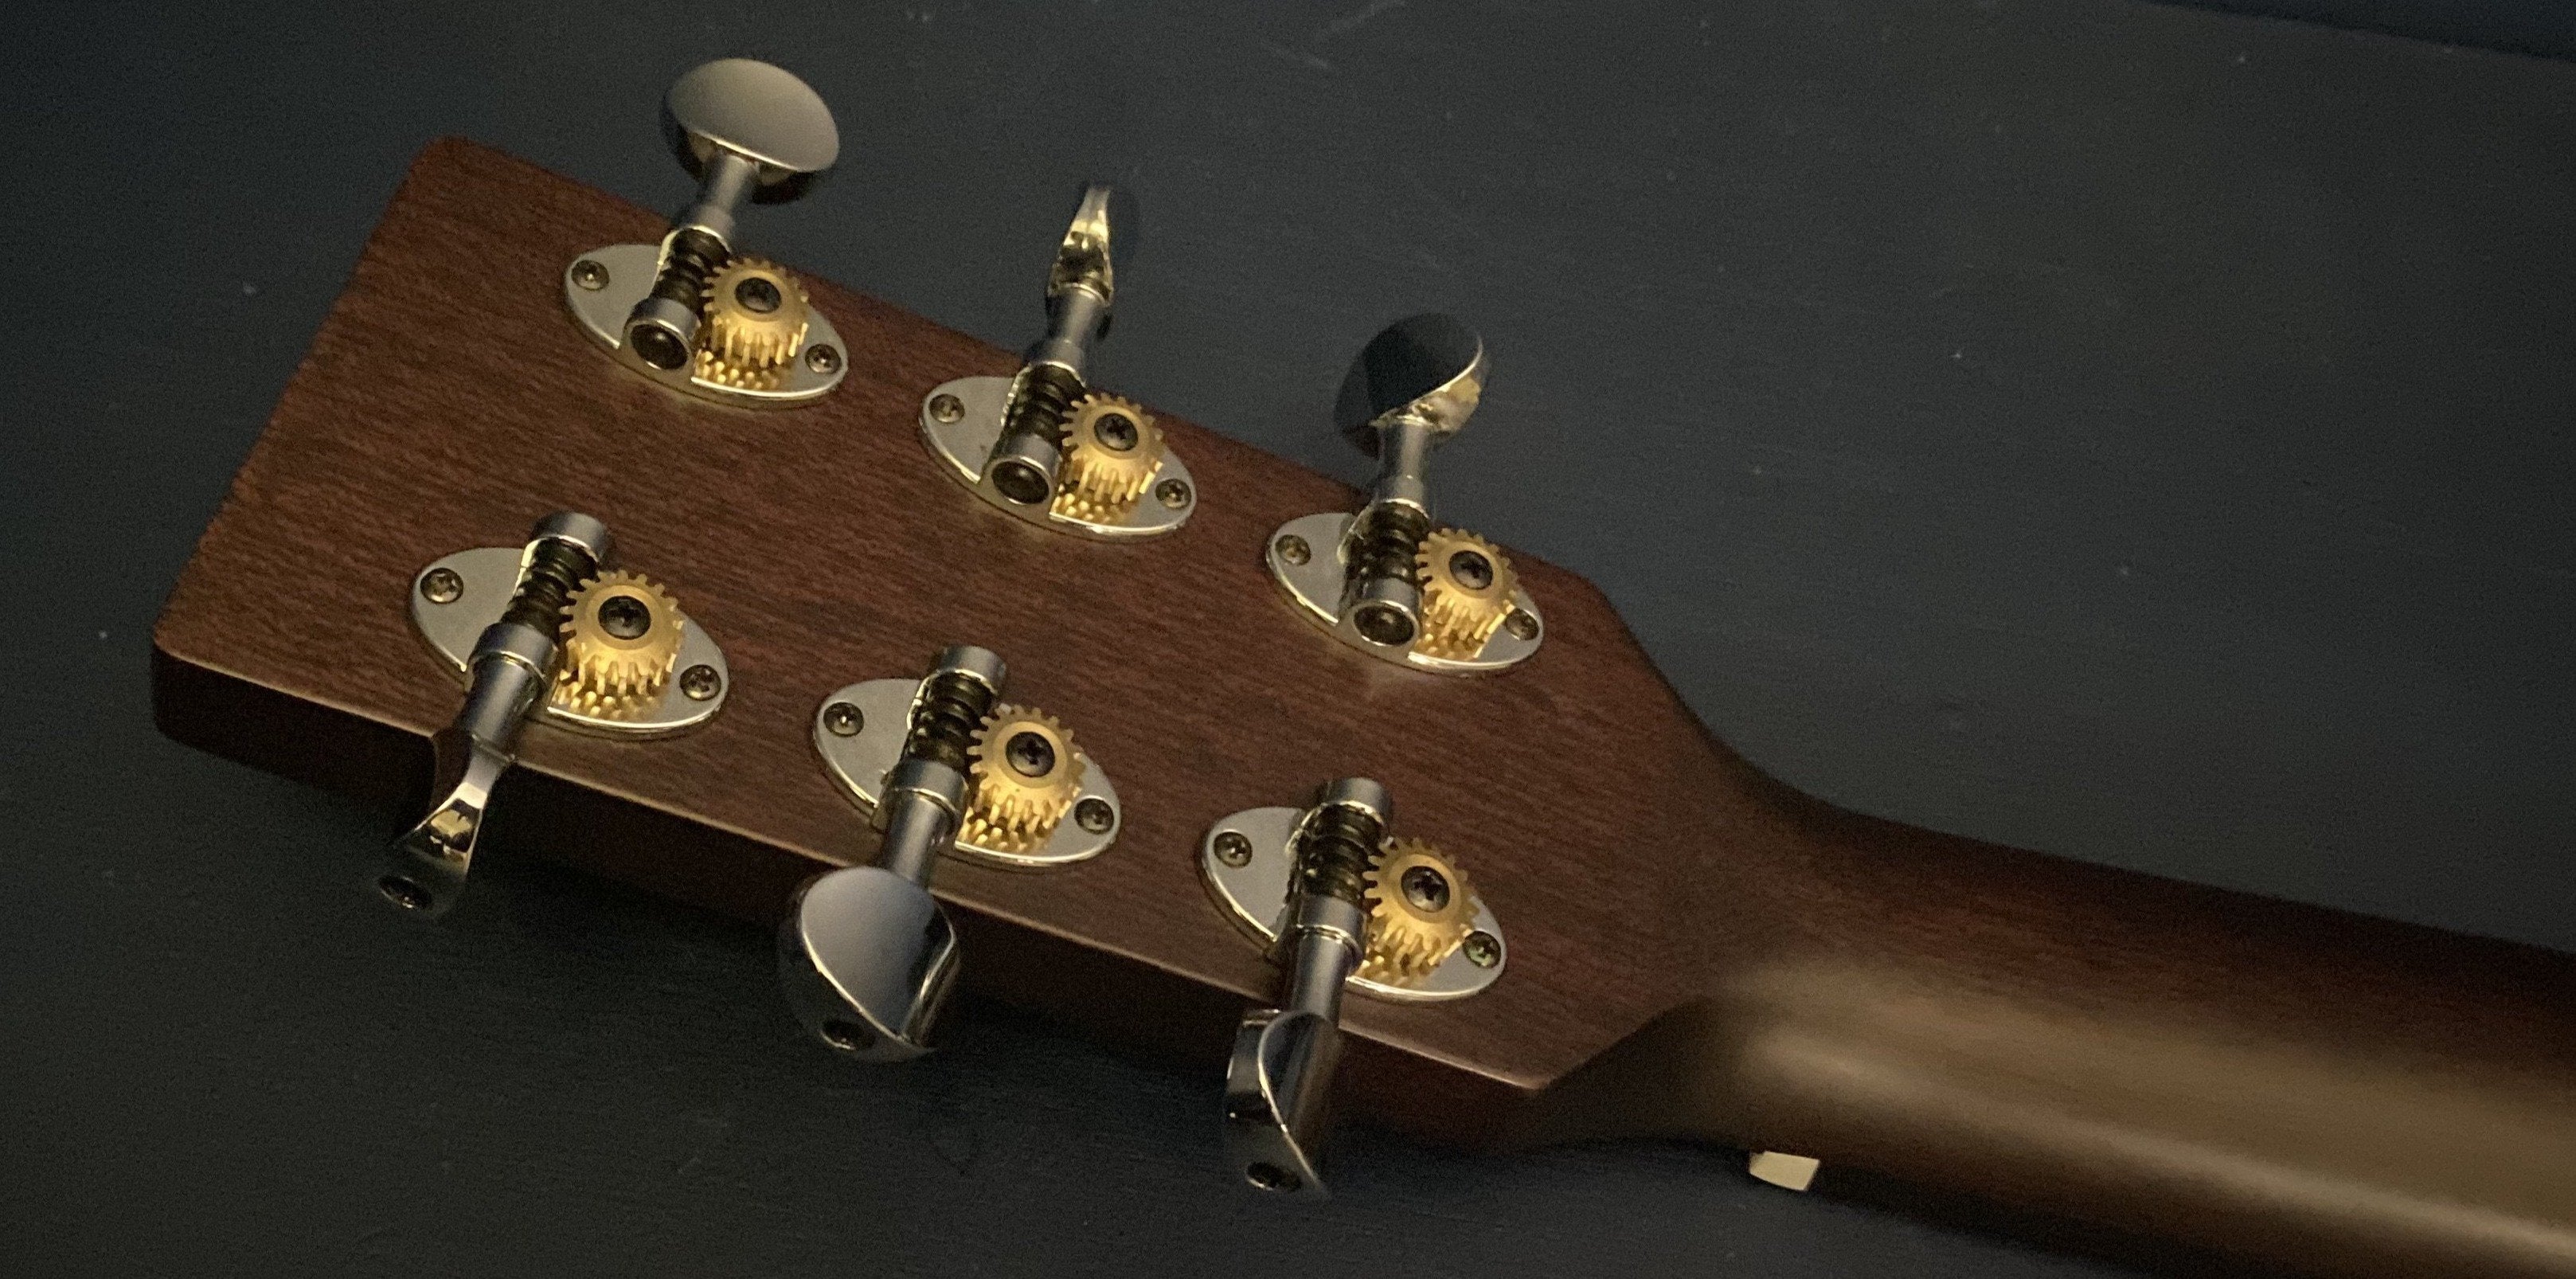 Auden Rosewood Bowman Spruce Top Electro Acoustic Guitar, Electro Acoustic Guitar for sale at Richards Guitars.